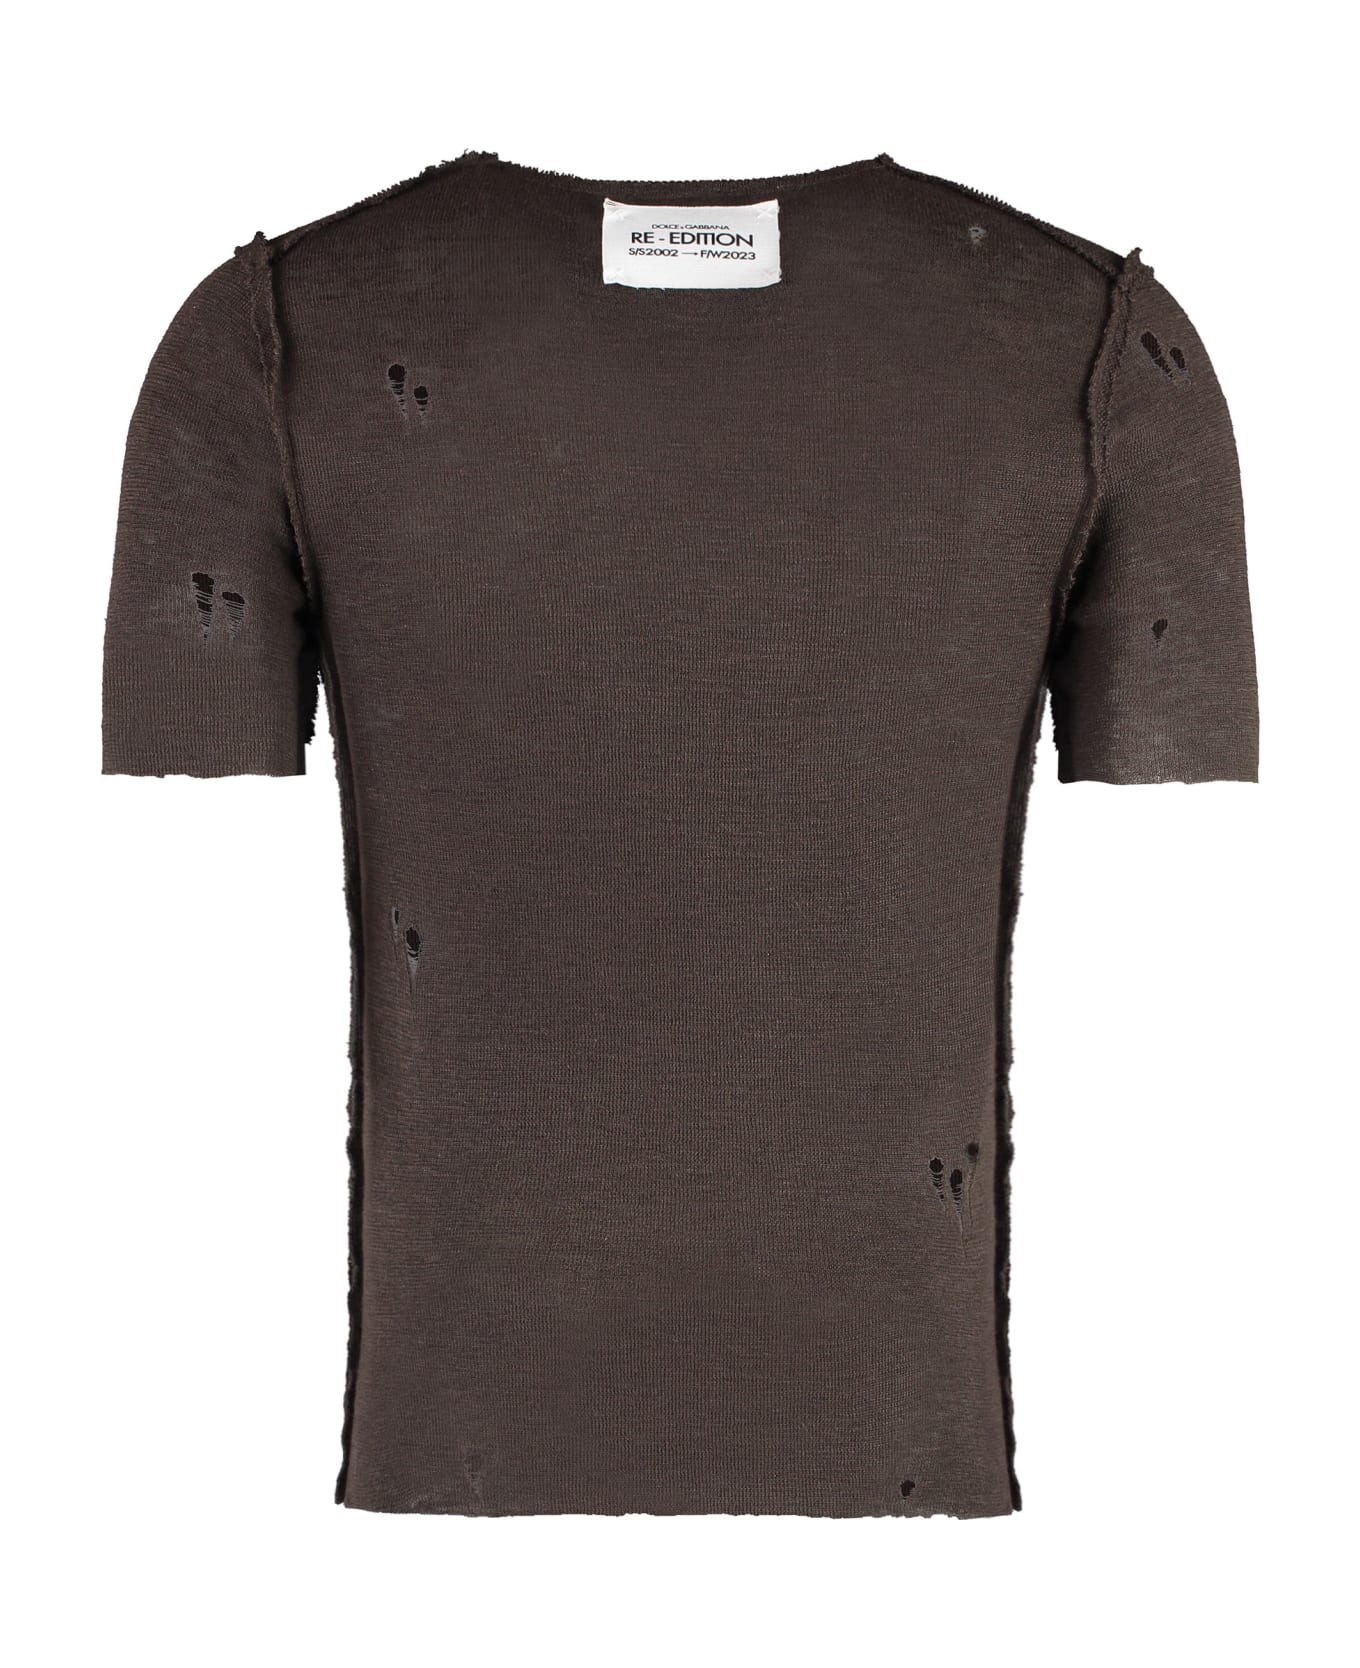 Dolce & Gabbana Worn-out Details Knit T-shirt - brown